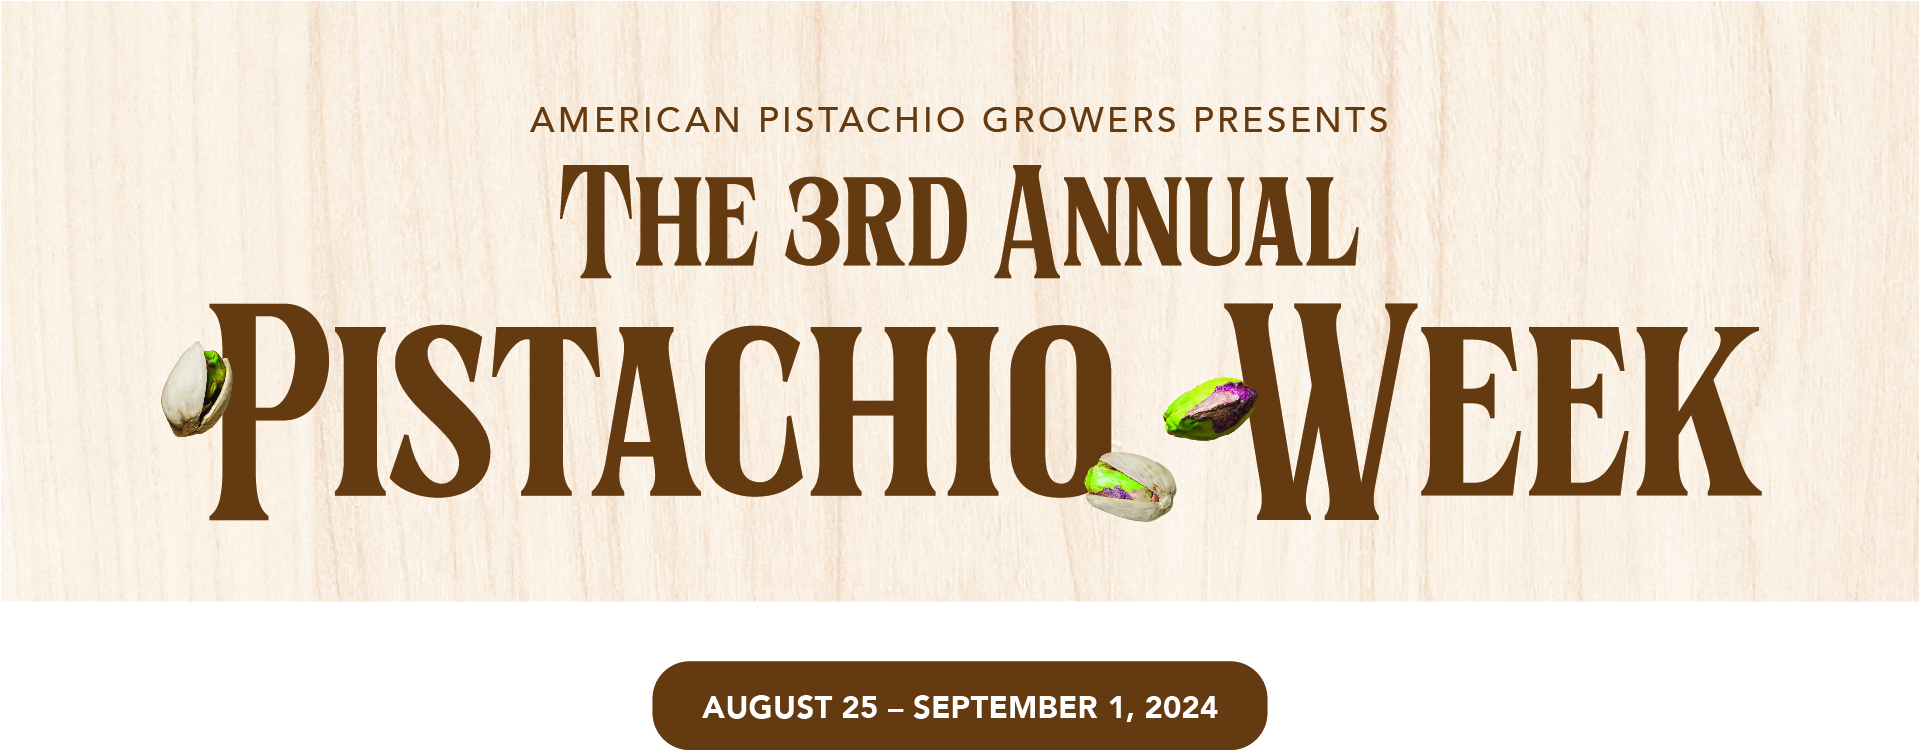 Third Annual Pistachio Week